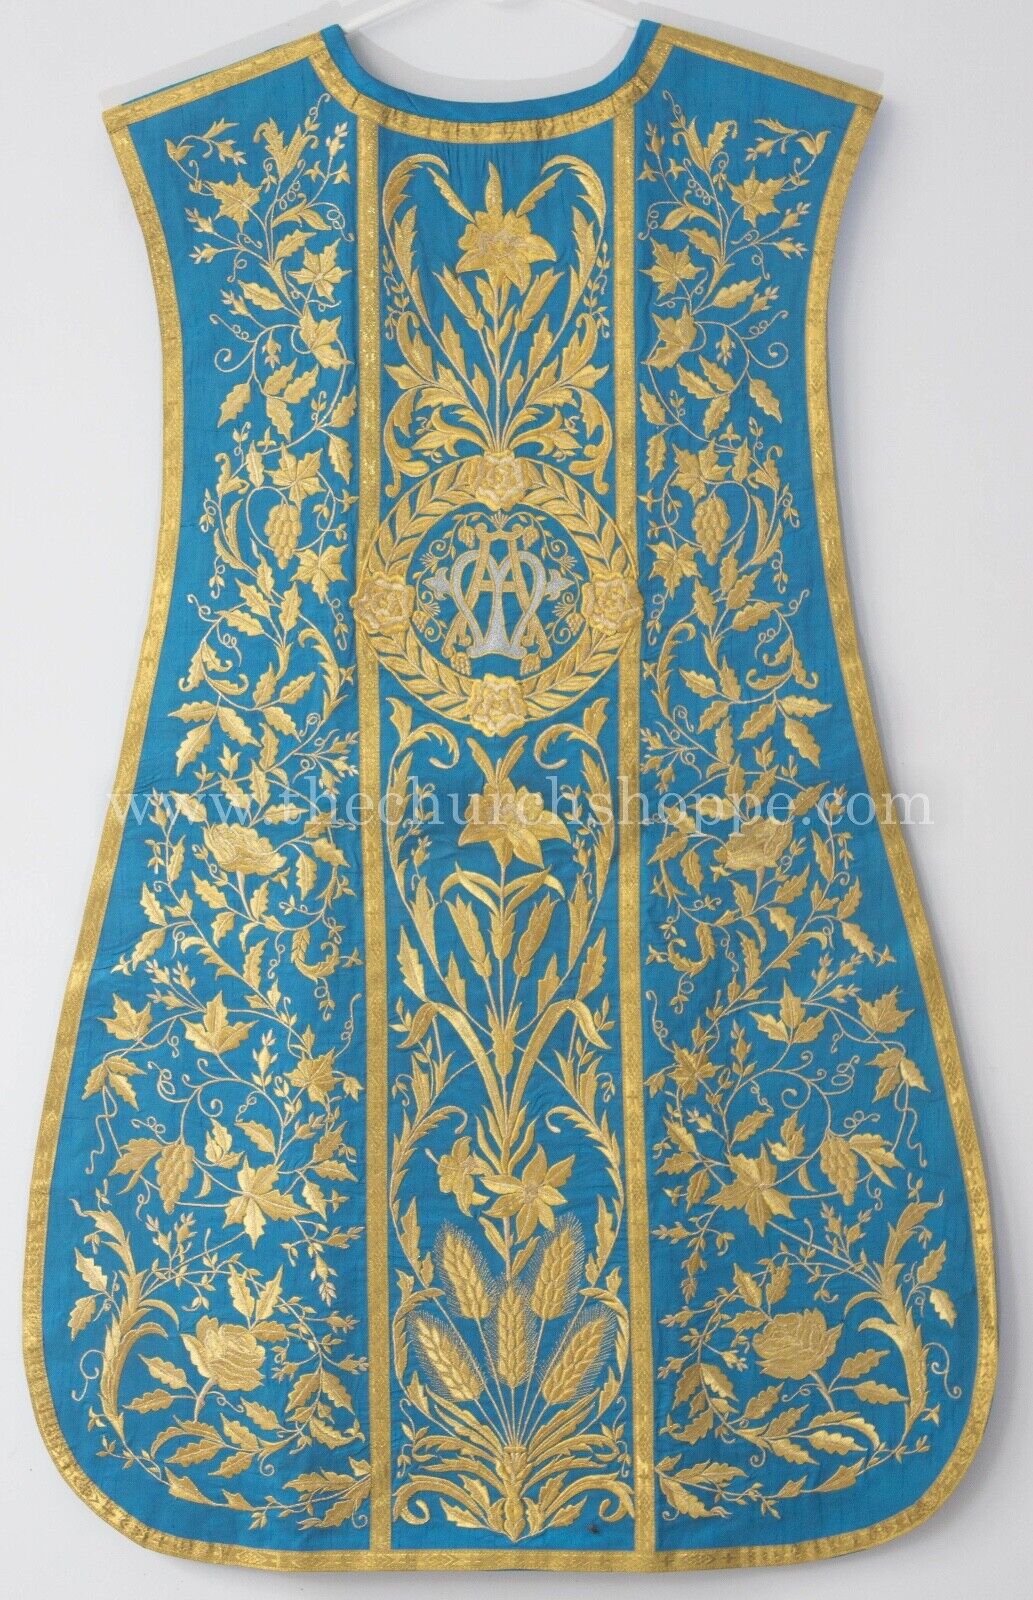 Marian Blue Spanish Fiddleback Vestment & mass set wt Vintage Embroidery pattern